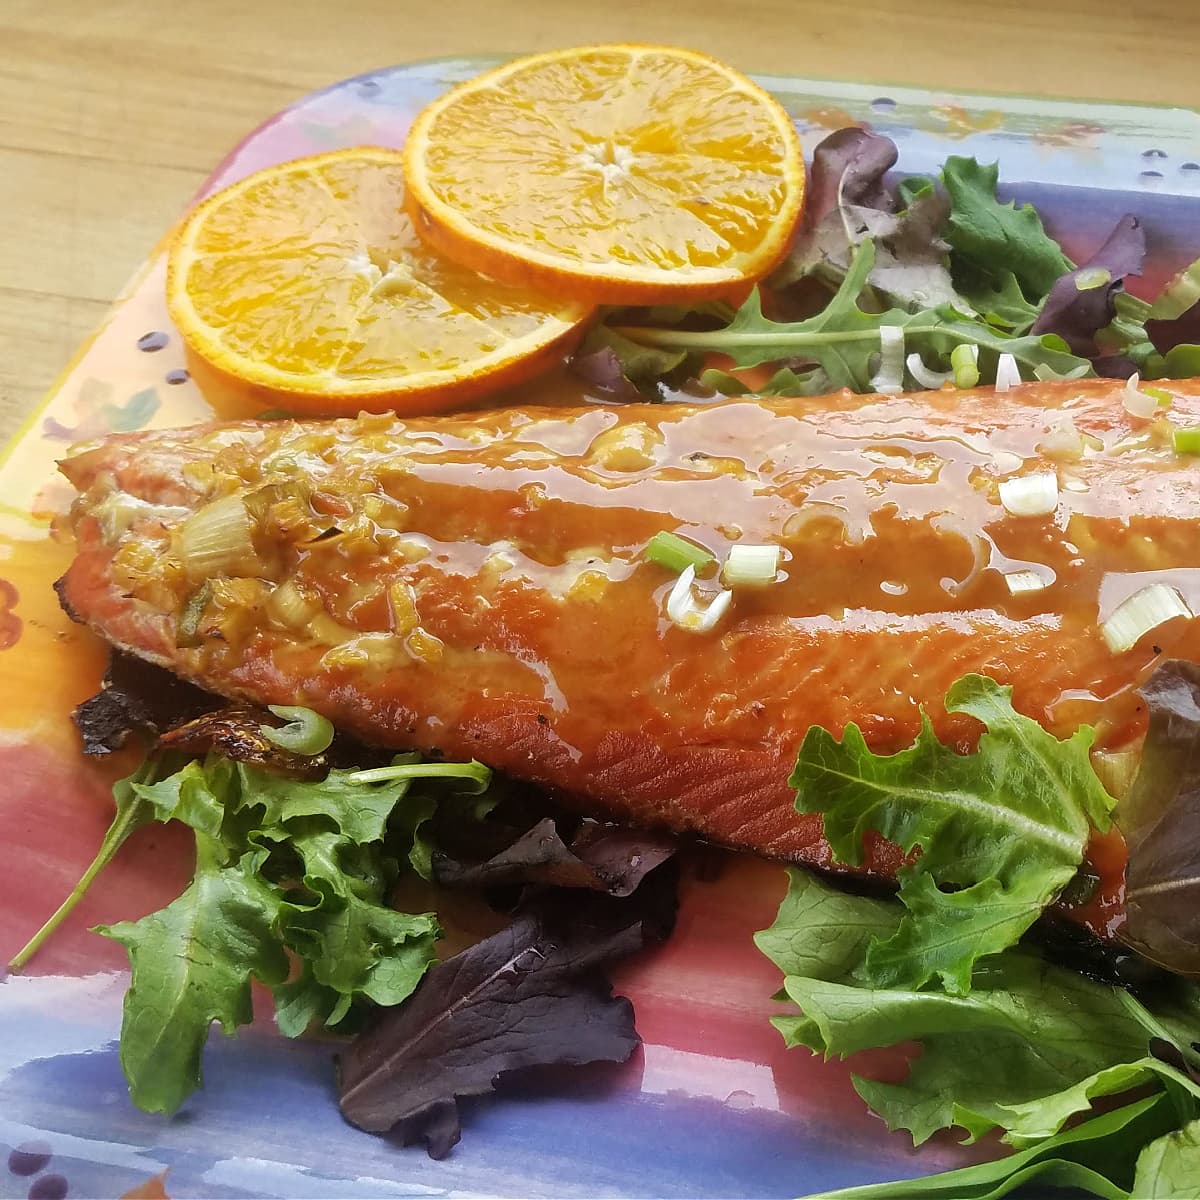 Large grilled salmon fillet on a bed of greens on a colorful rectangular platter, garnished with orange slices.